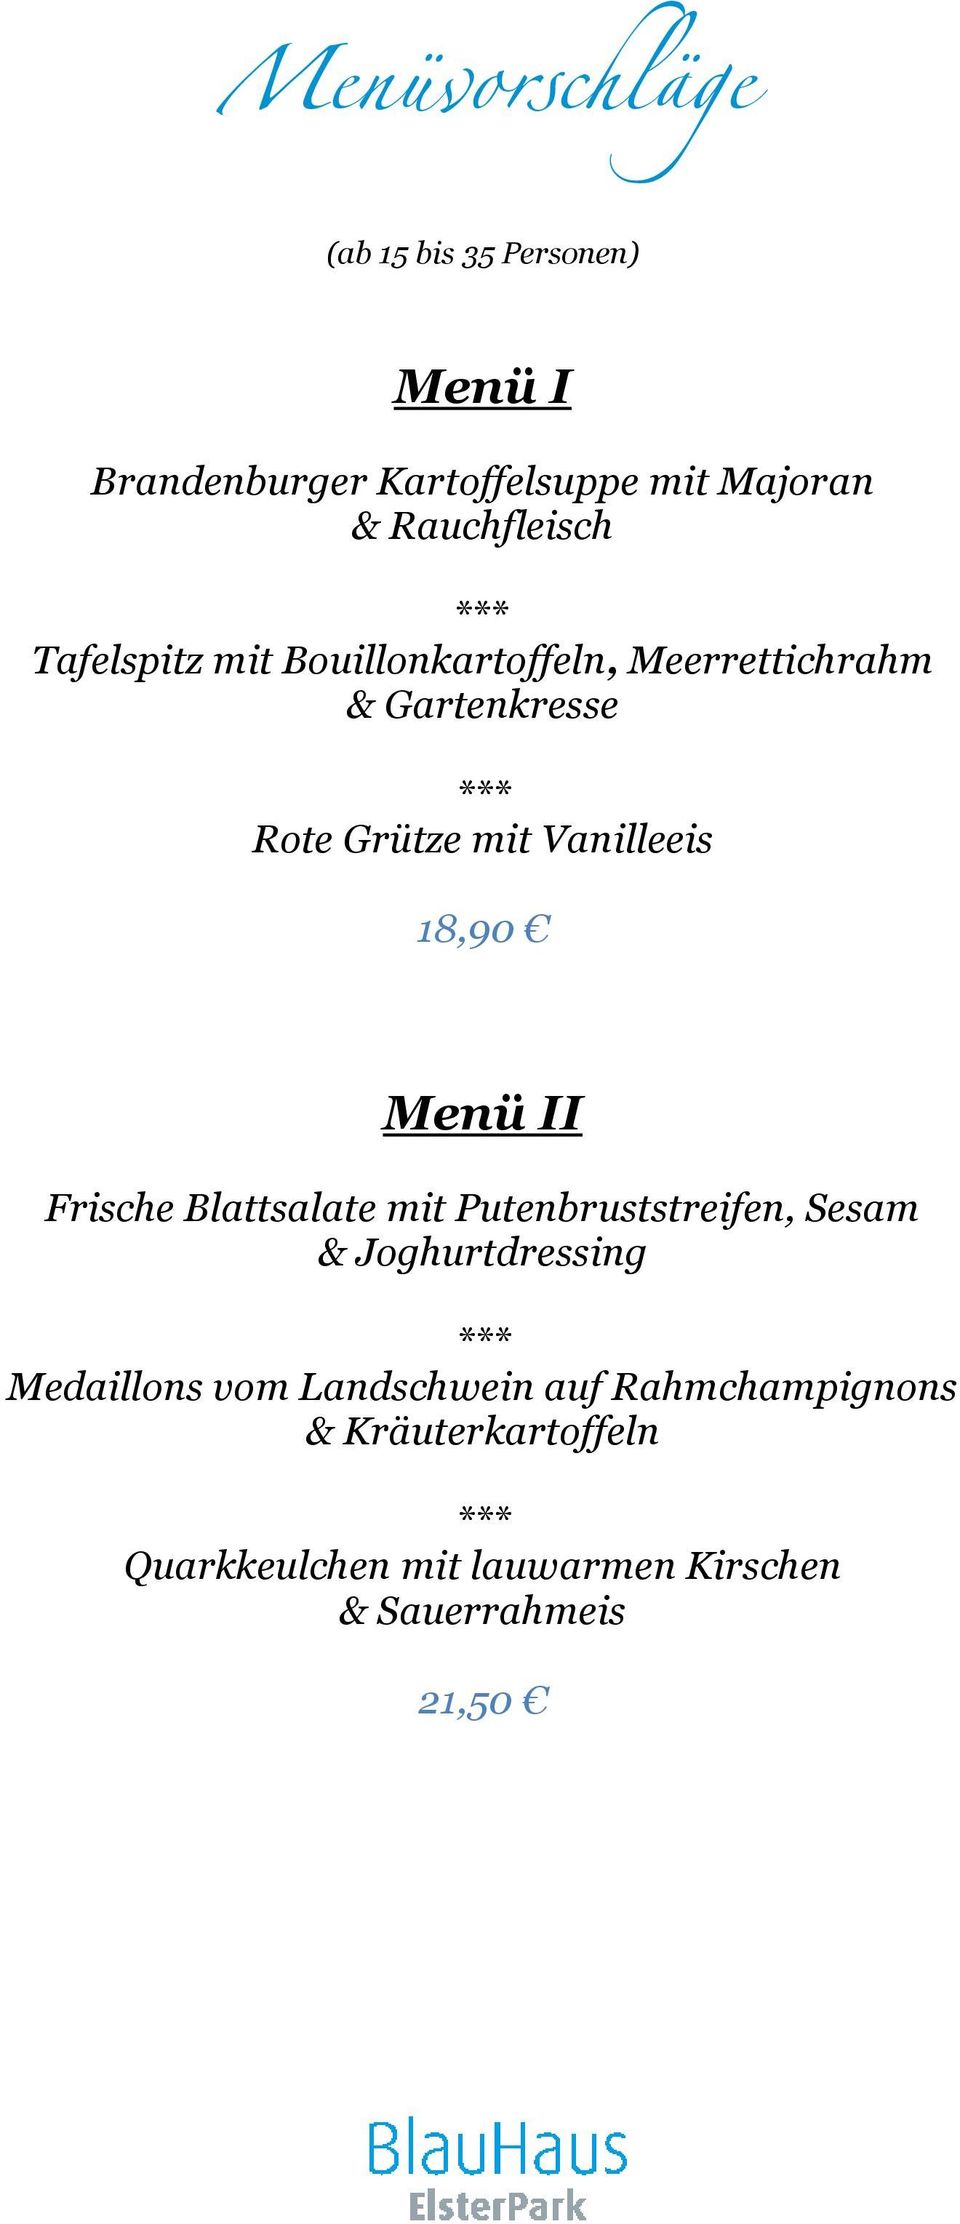 Vanilleeis 18,90 Menü II Frische Blattsalate mit Putenbruststreifen, Sesam & Joghurtdressing